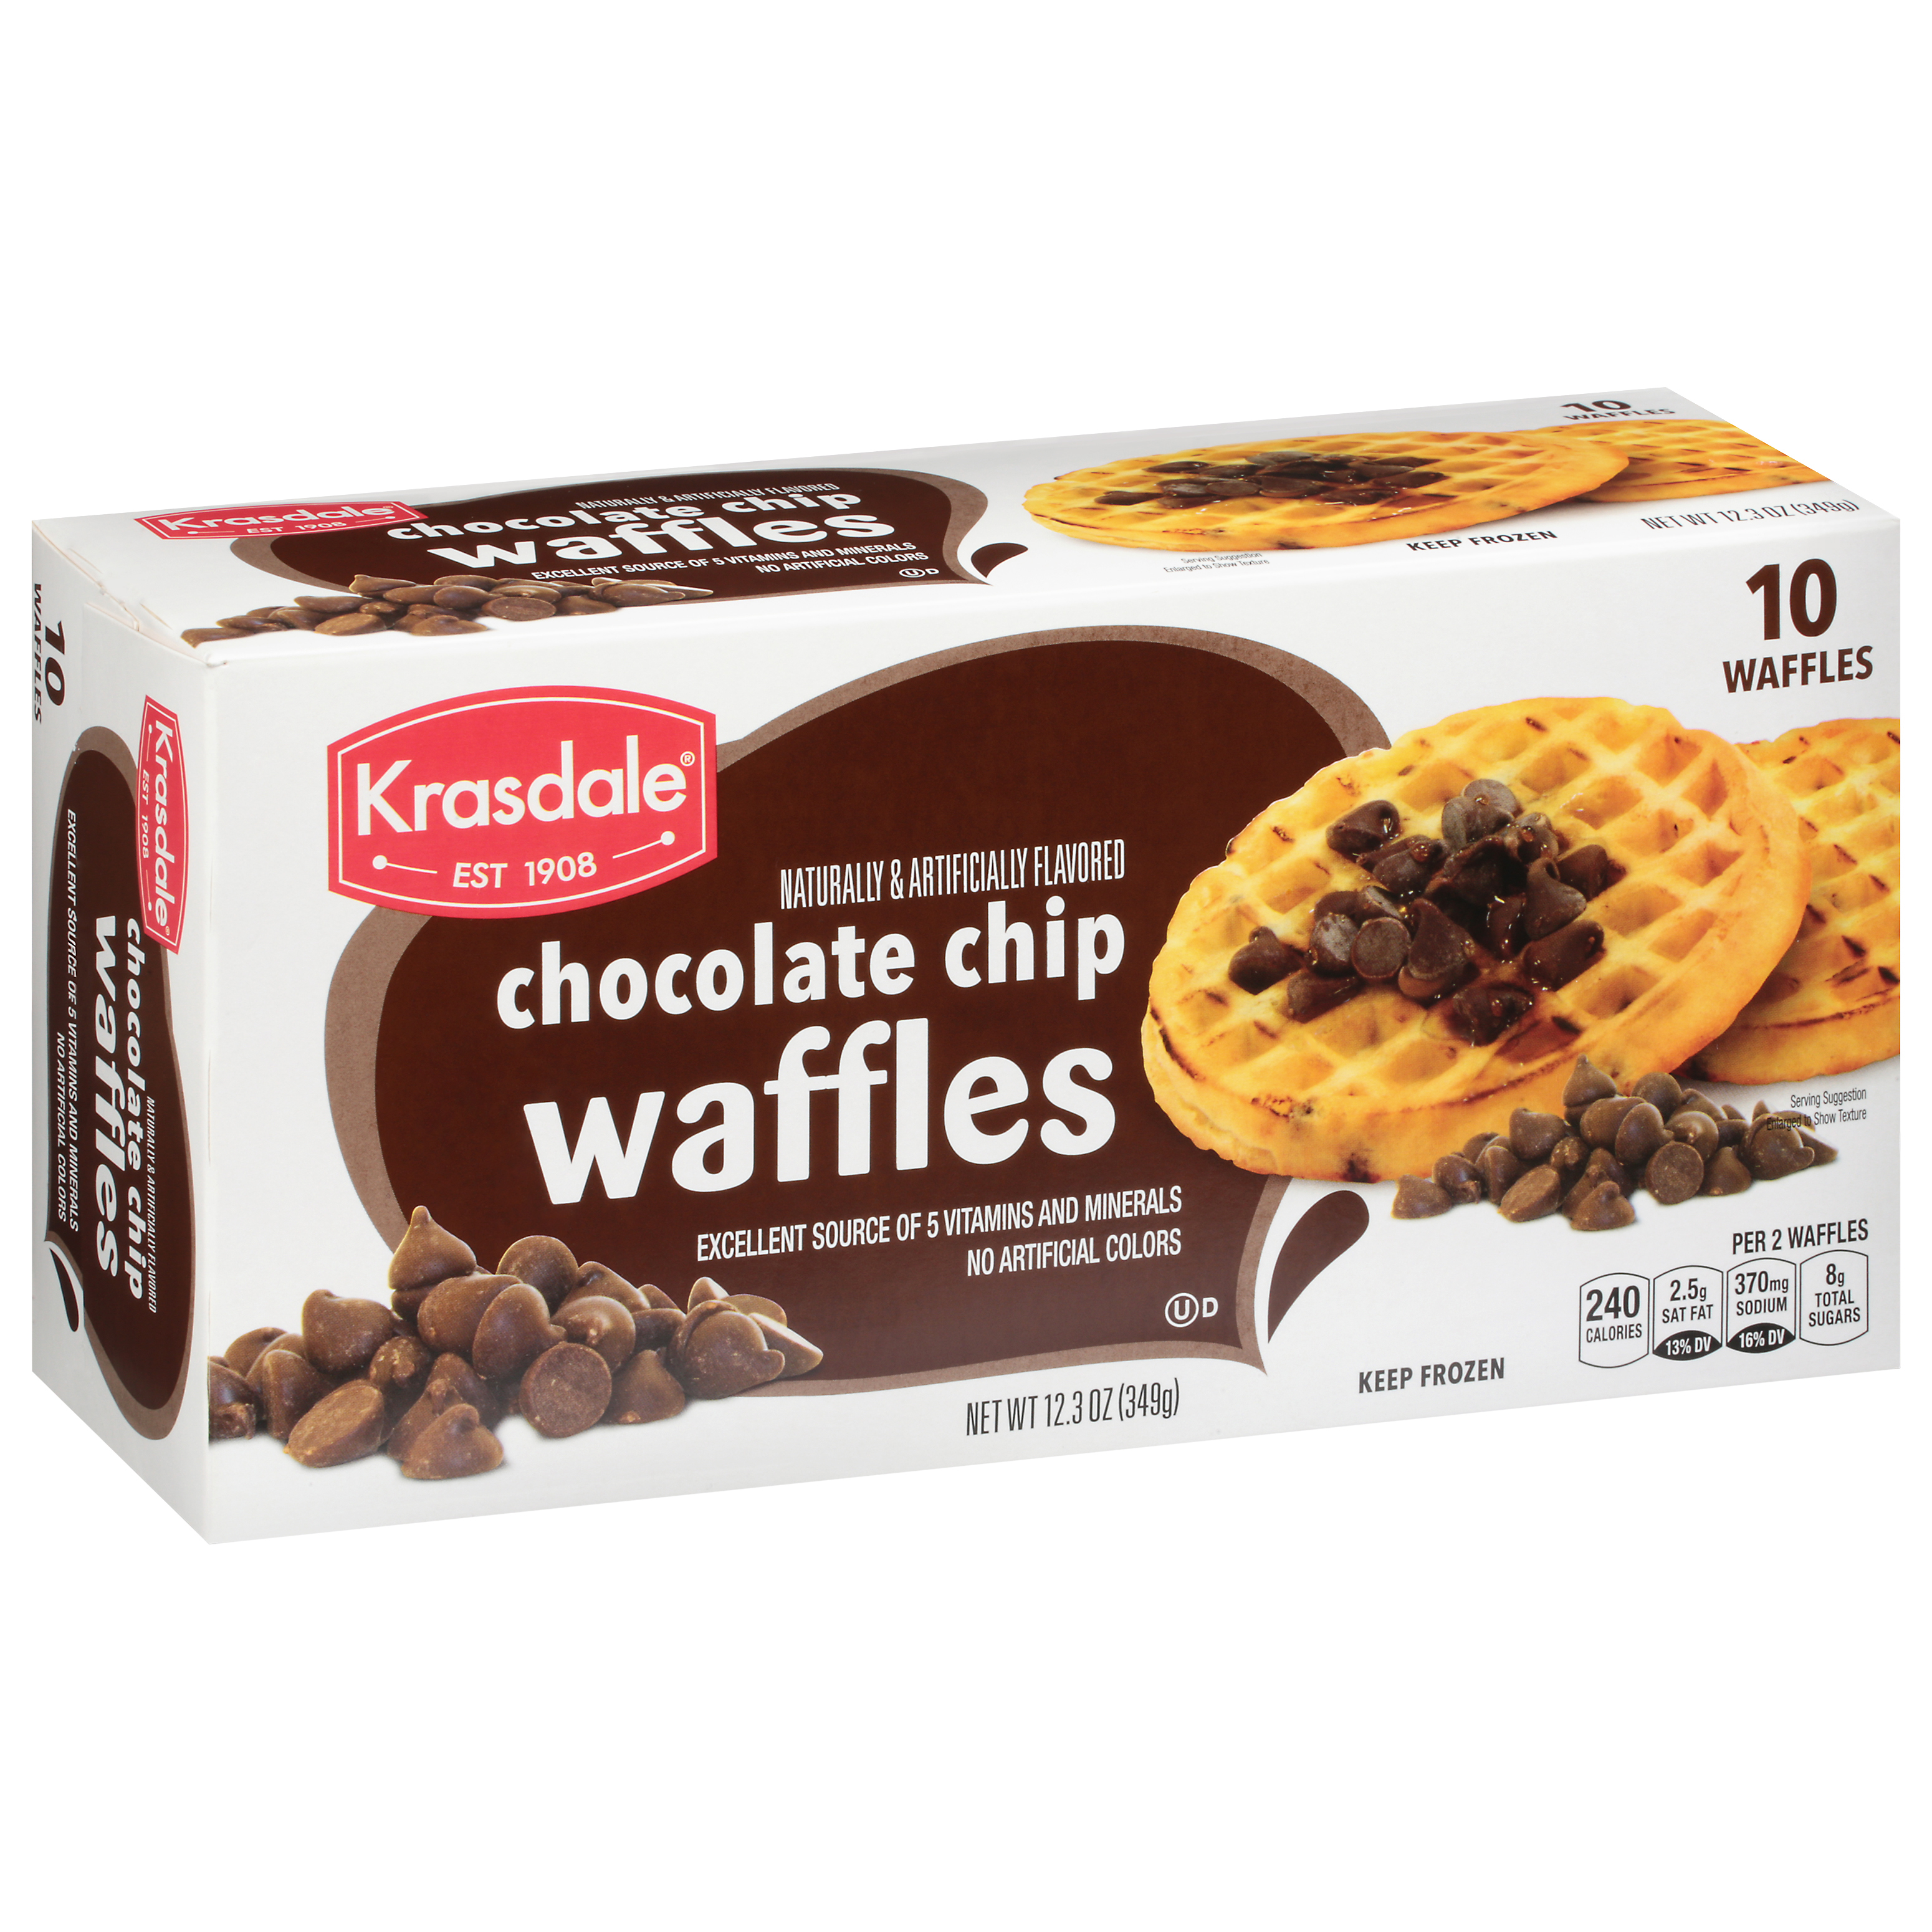 Krasdale Chocolate Chip Waffles 10 Ea image